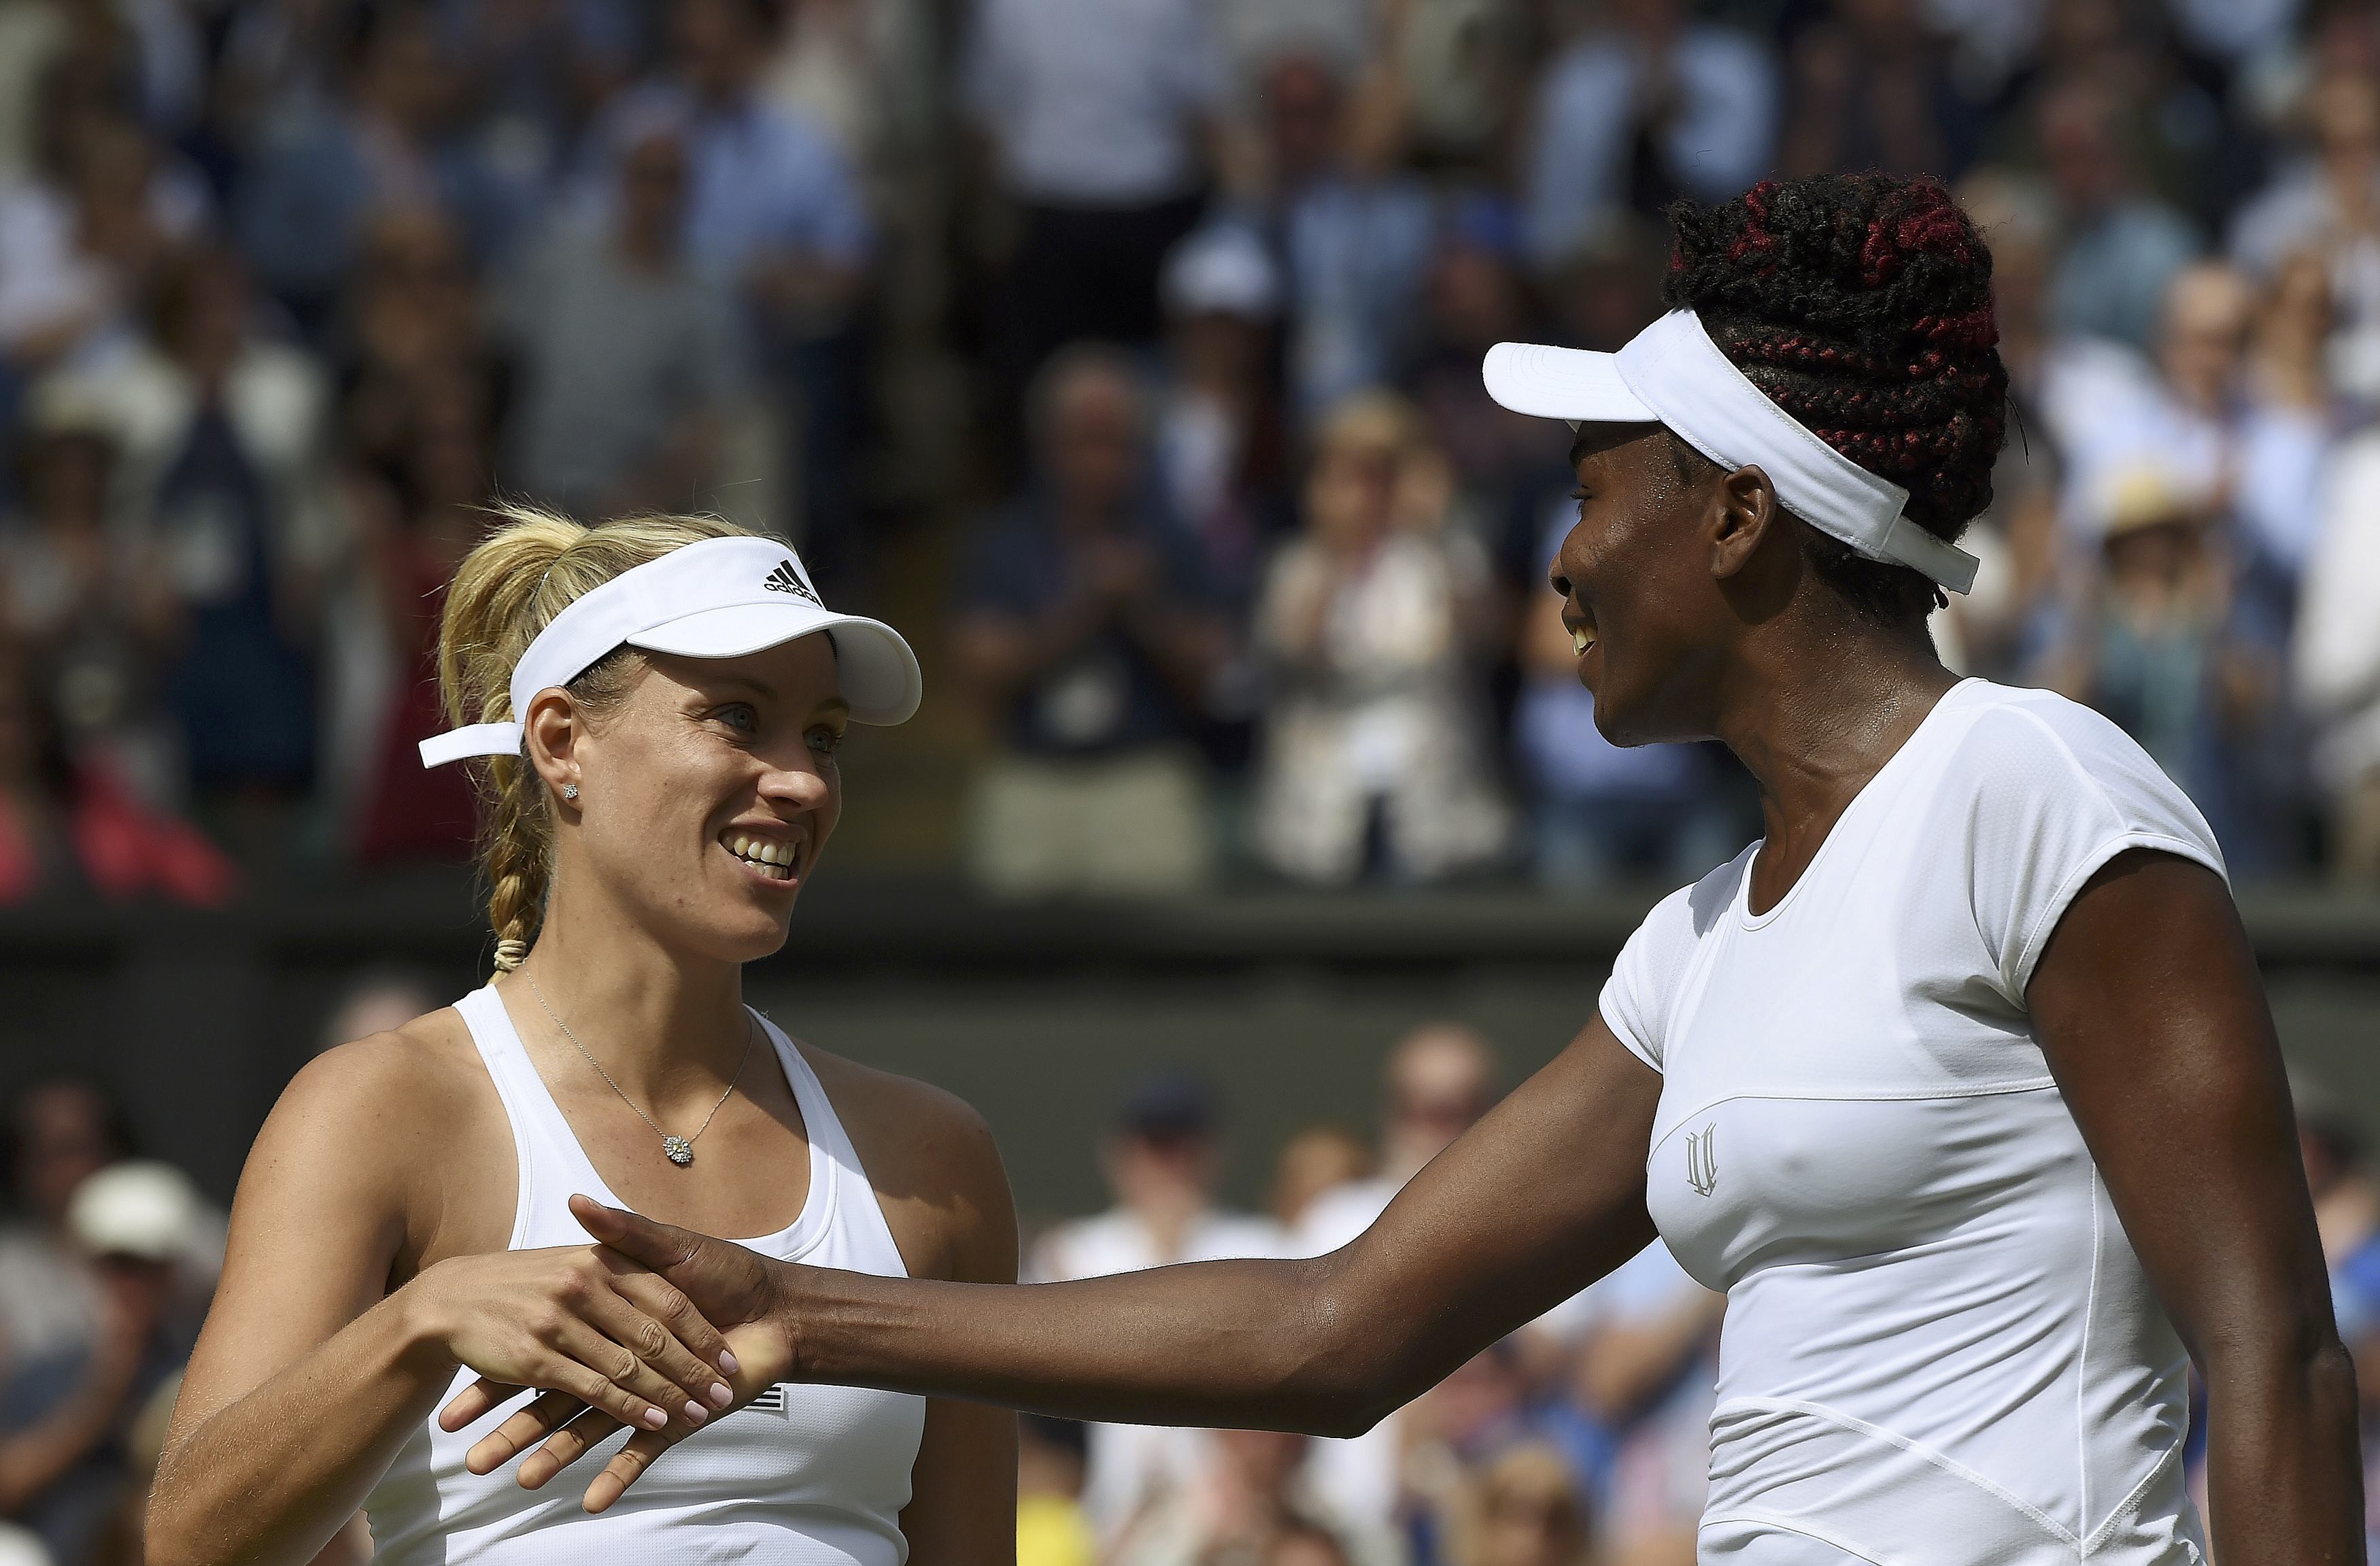 Tennis: Kerber confident of beating Serena in final showdown